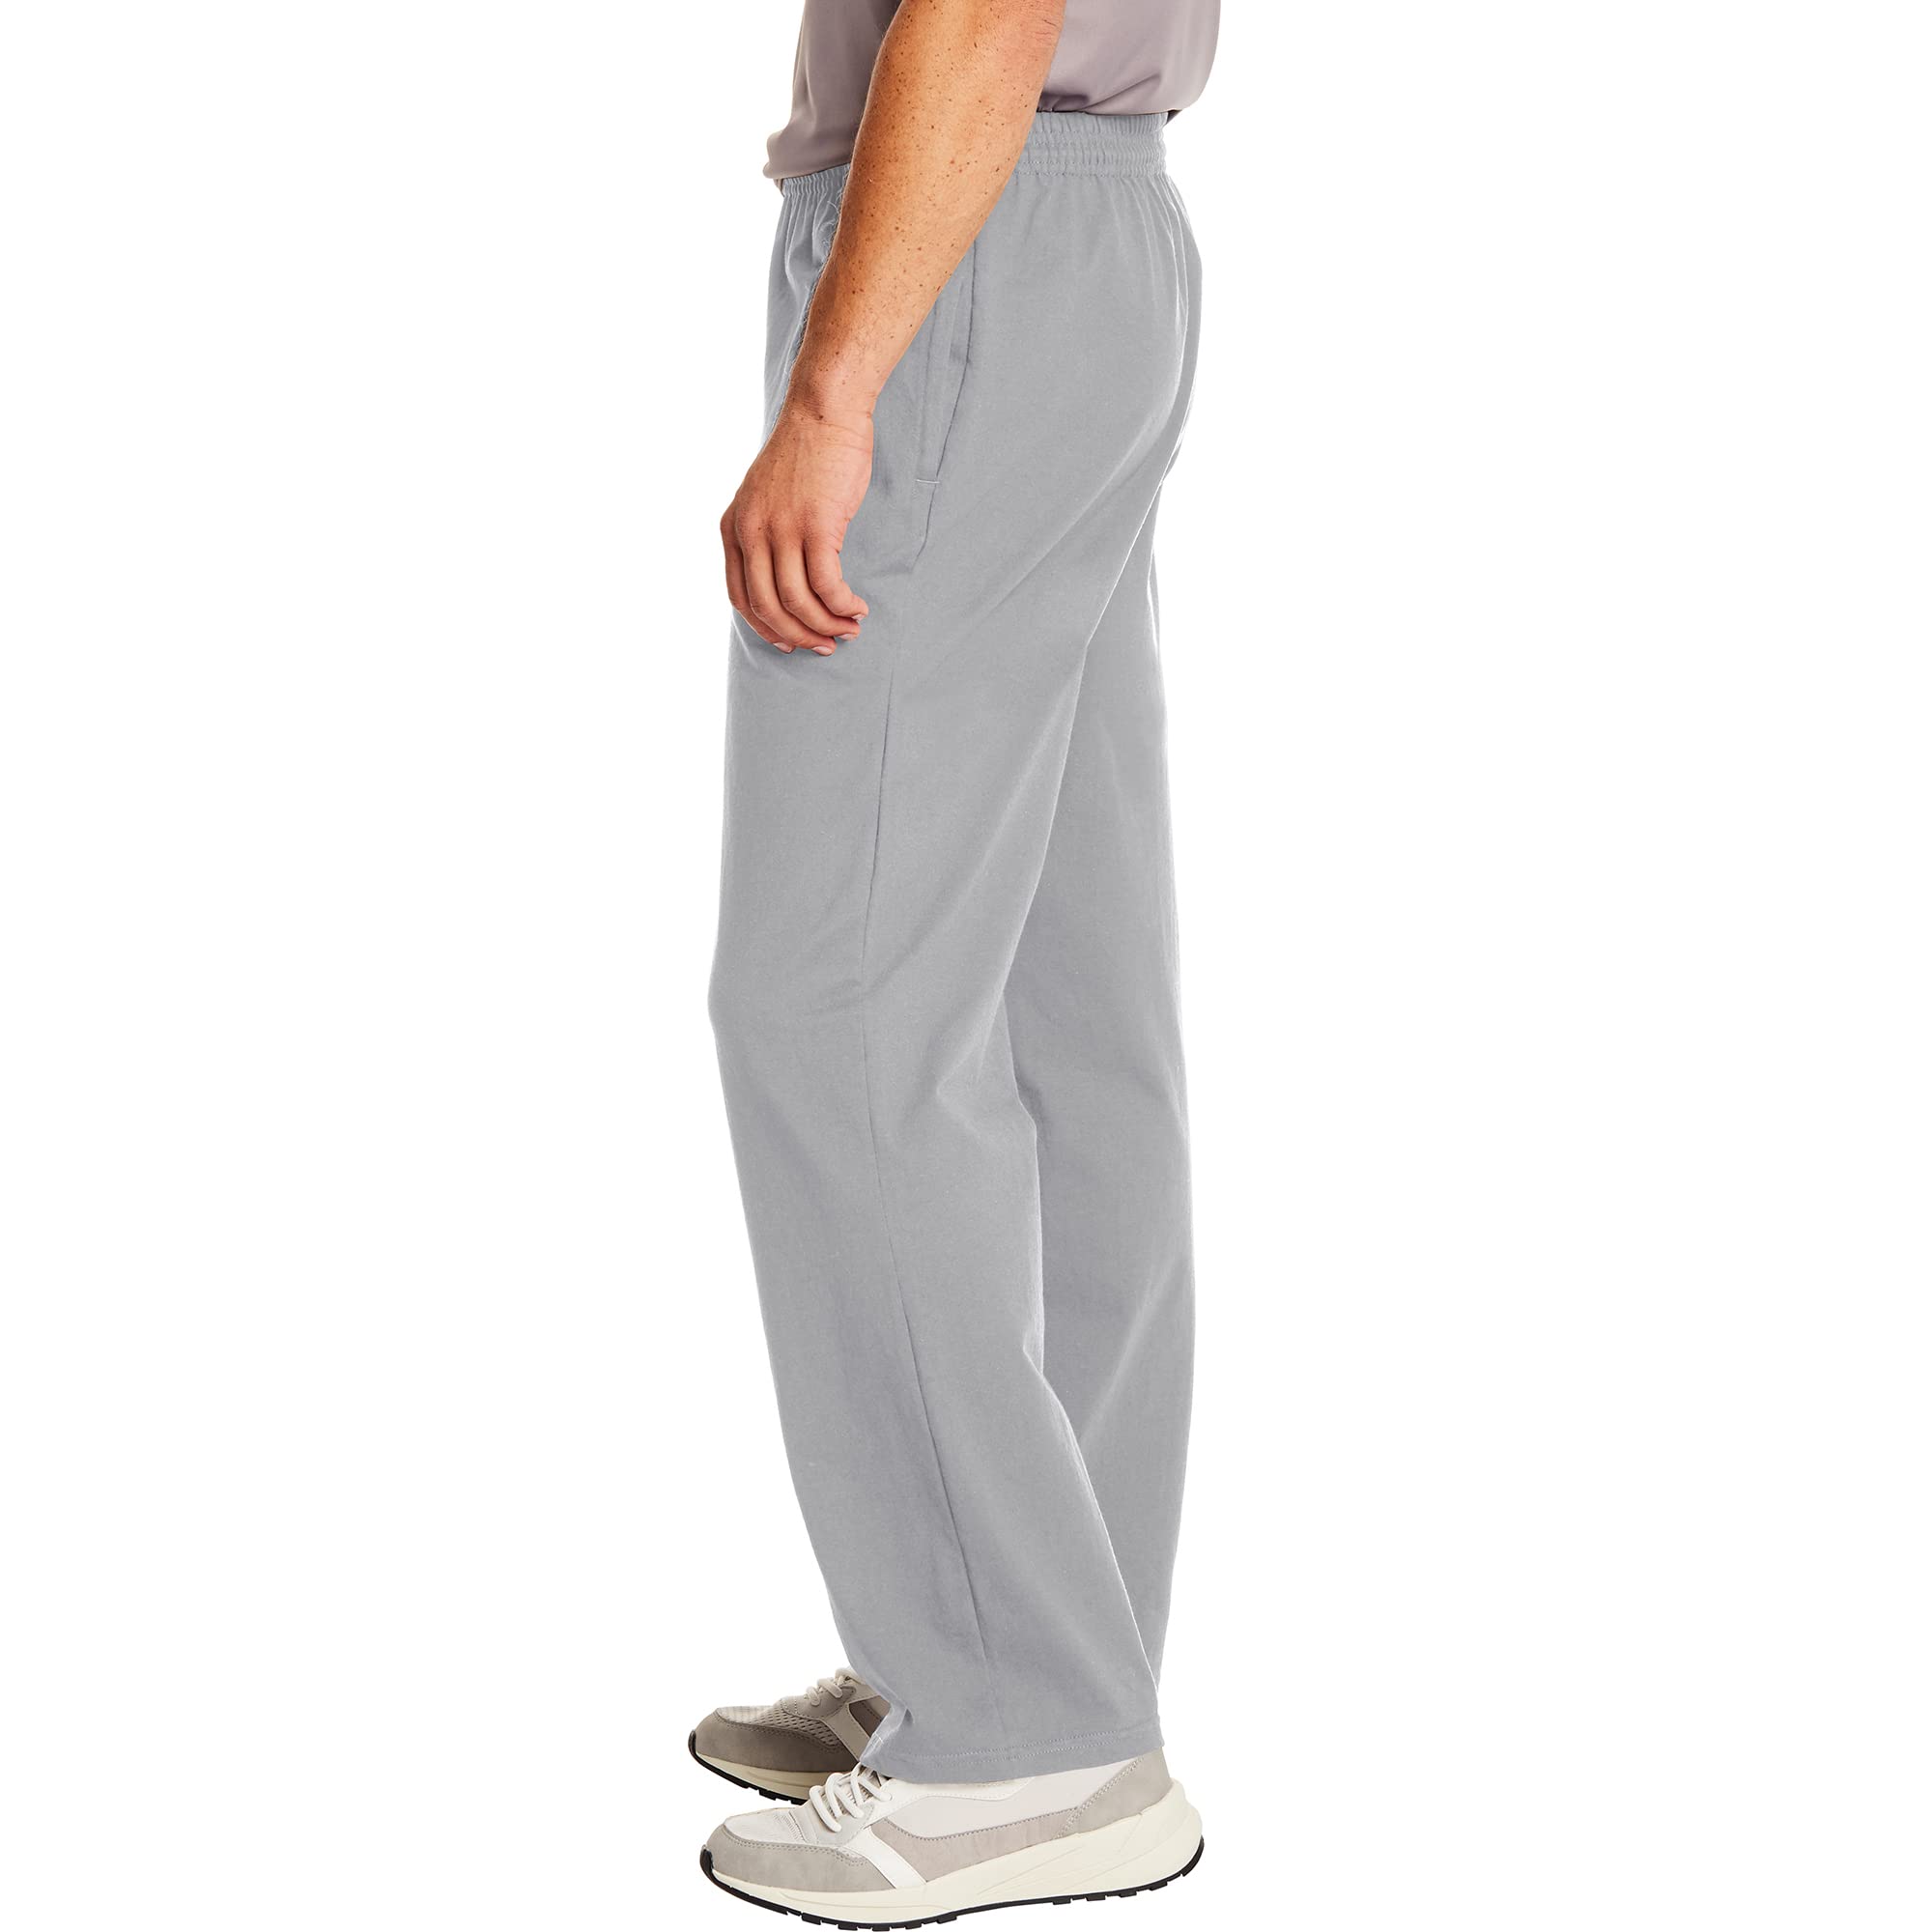 Hanes Essentials Sweatpants, Men’s Cotton Jersey Pants with Pockets, 33”